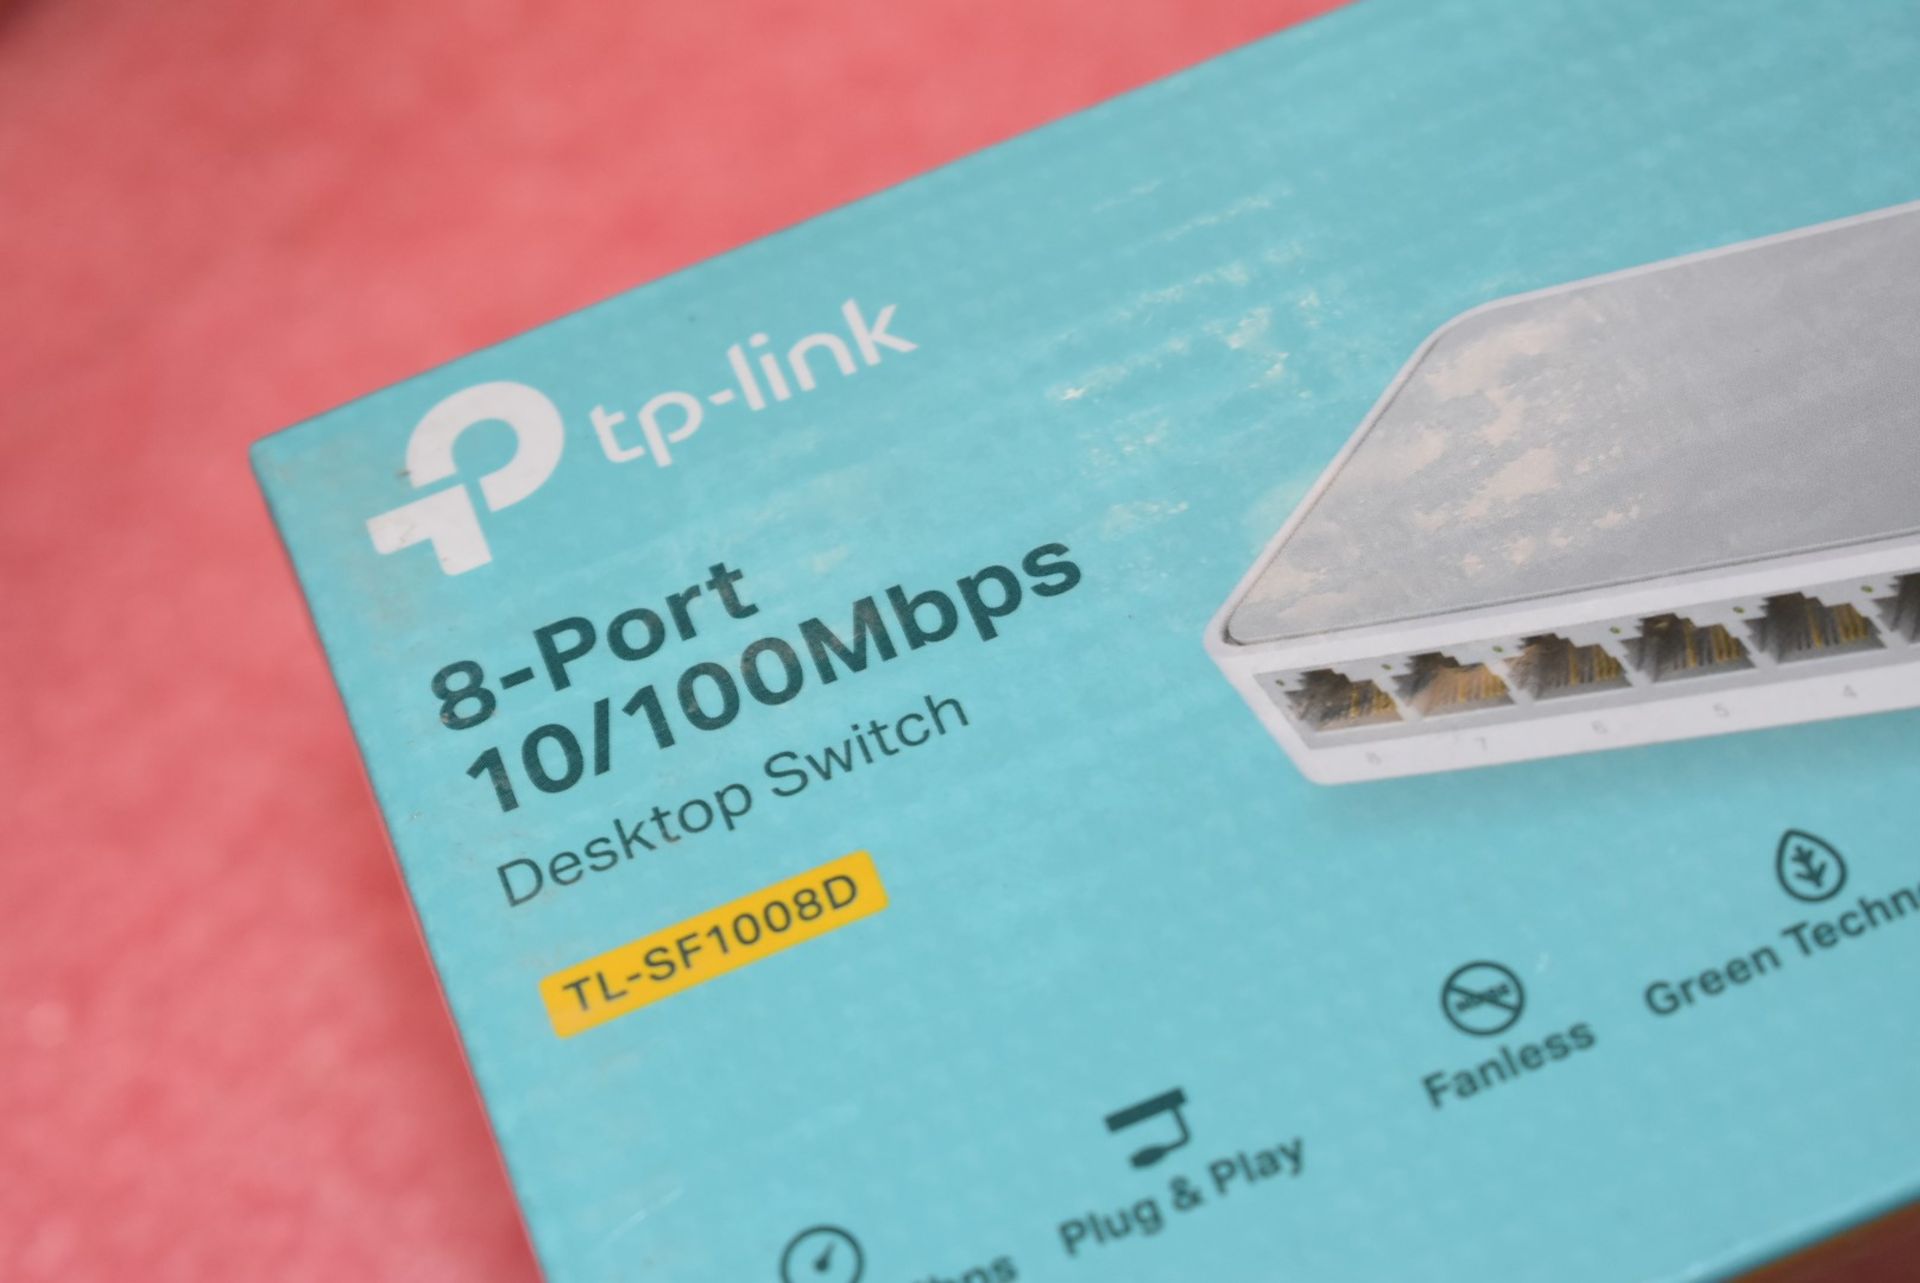 1 x TP Link 8 Port 10/100Mbos Desktop Switch - Model TL-SF1008D - New Sealed Stock - Image 4 of 5